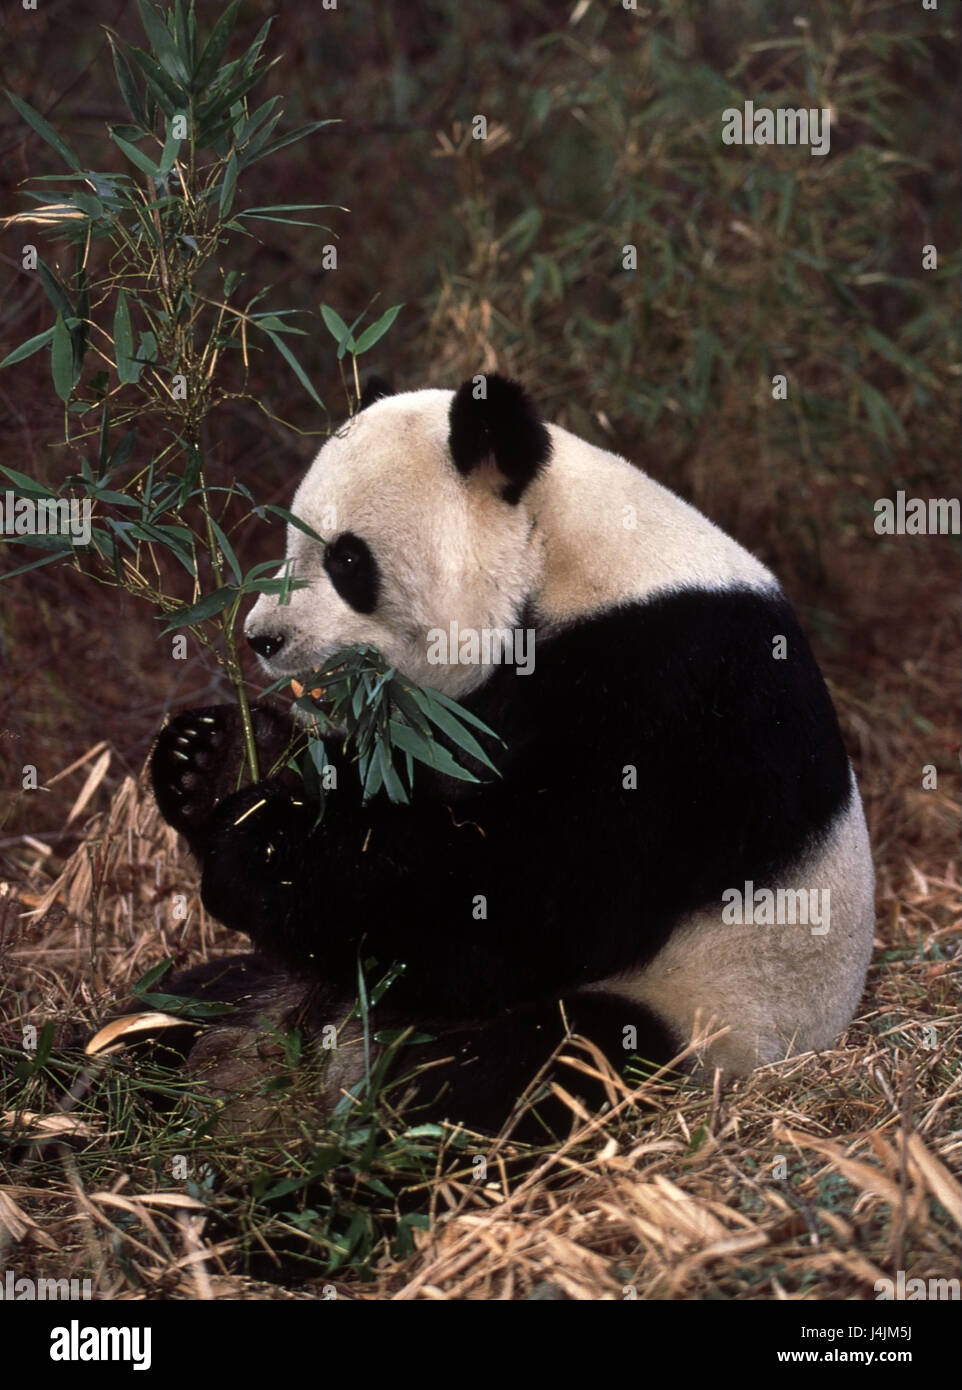 Legno, big panda, Ailuropoda melanoleuca, bambù, mangiare, panda panda giganti, orso panda, mammifero, ingestione Foto Stock